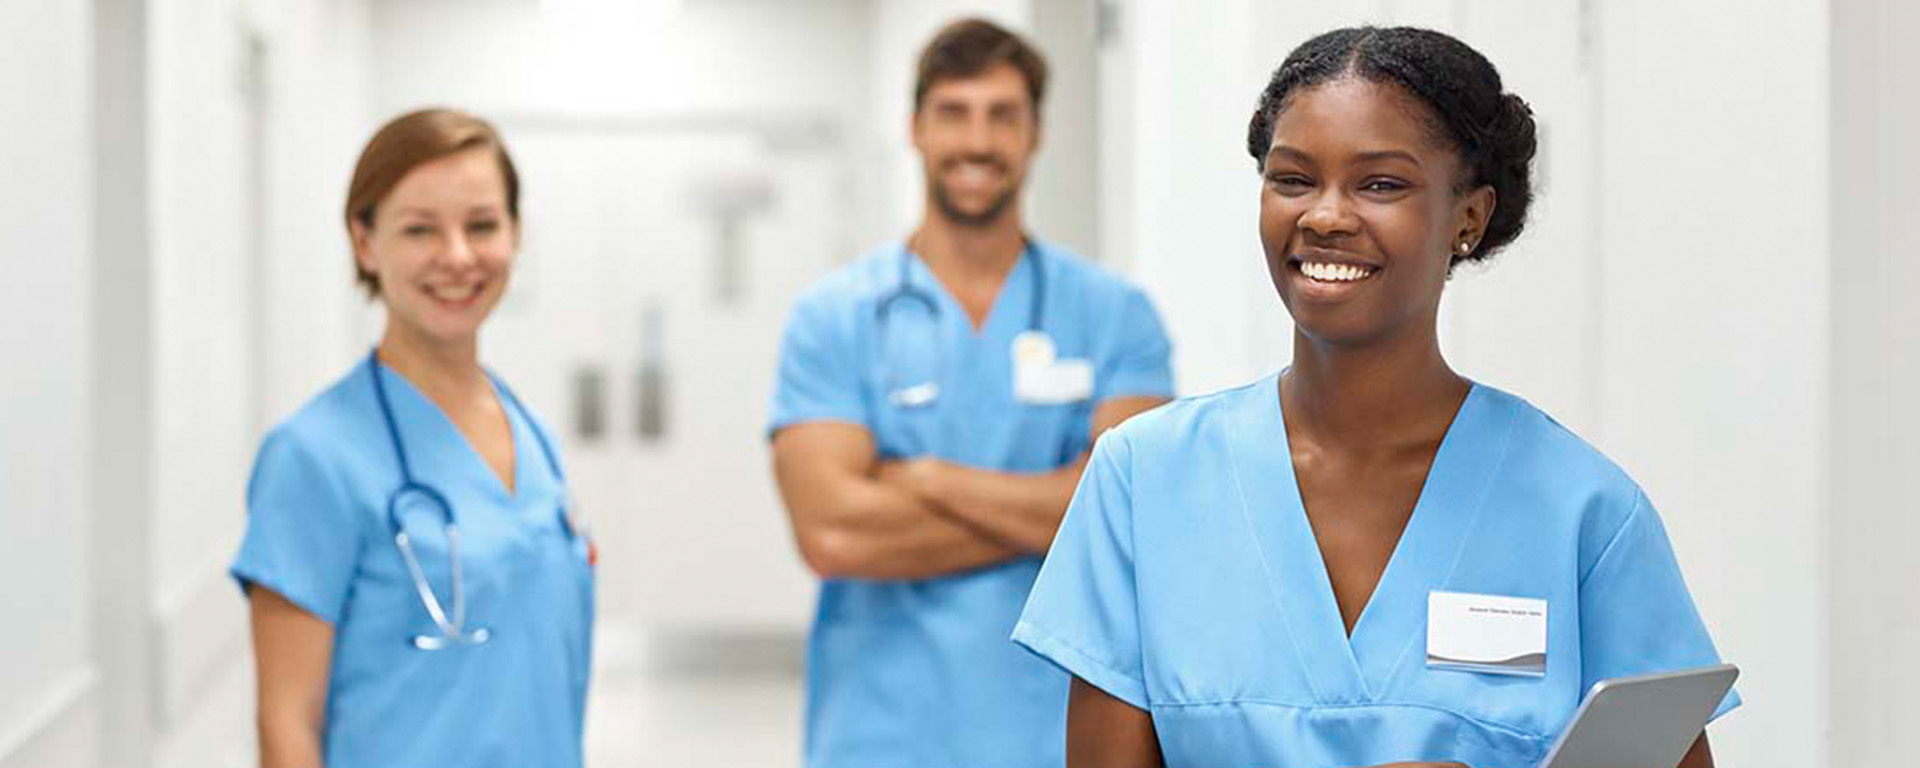 Smiling nurses standing in hospital hallway